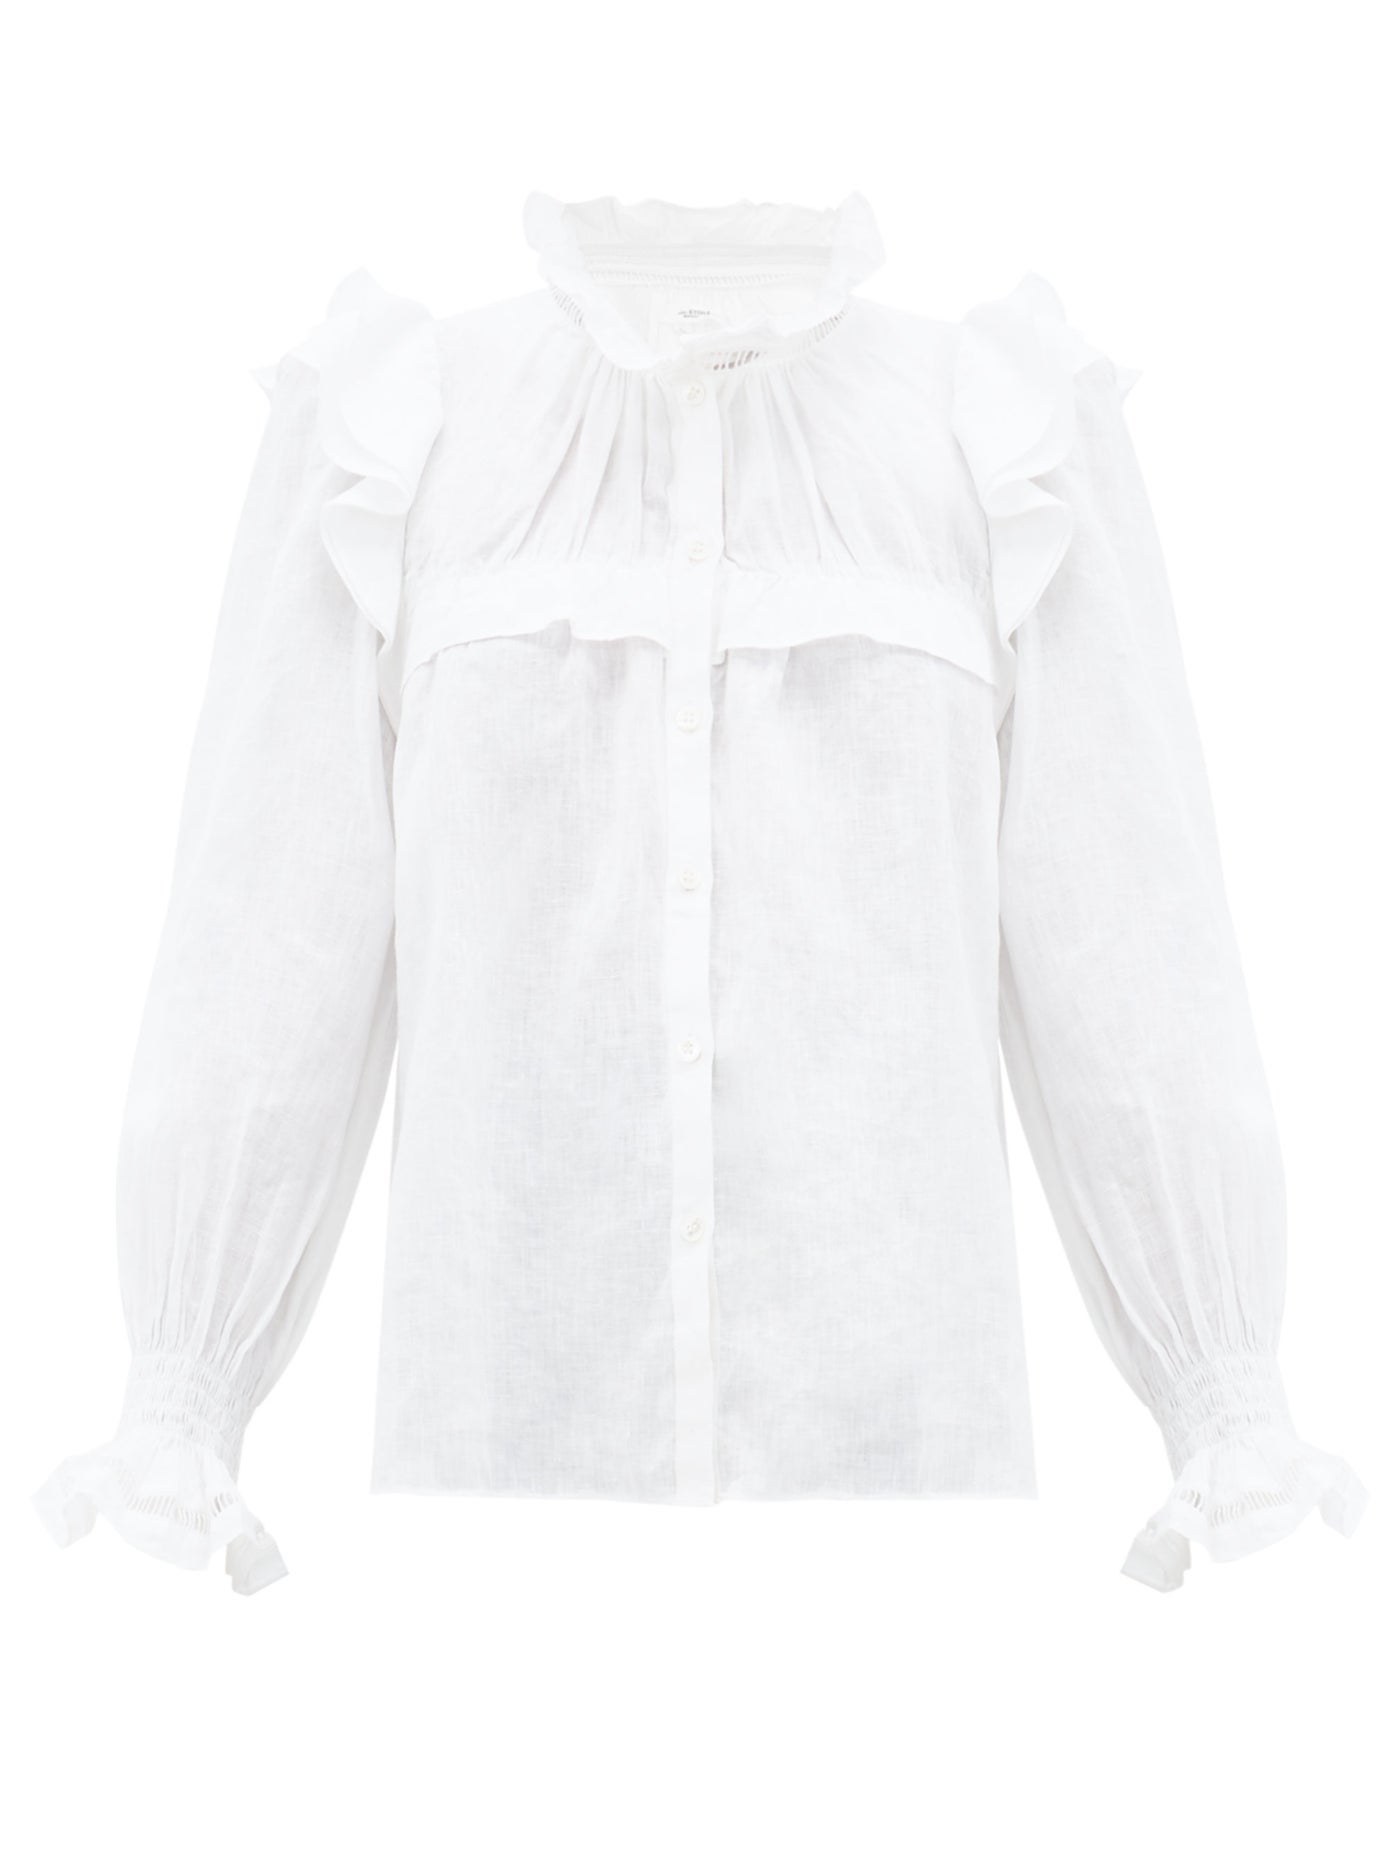 zara white frill blouse